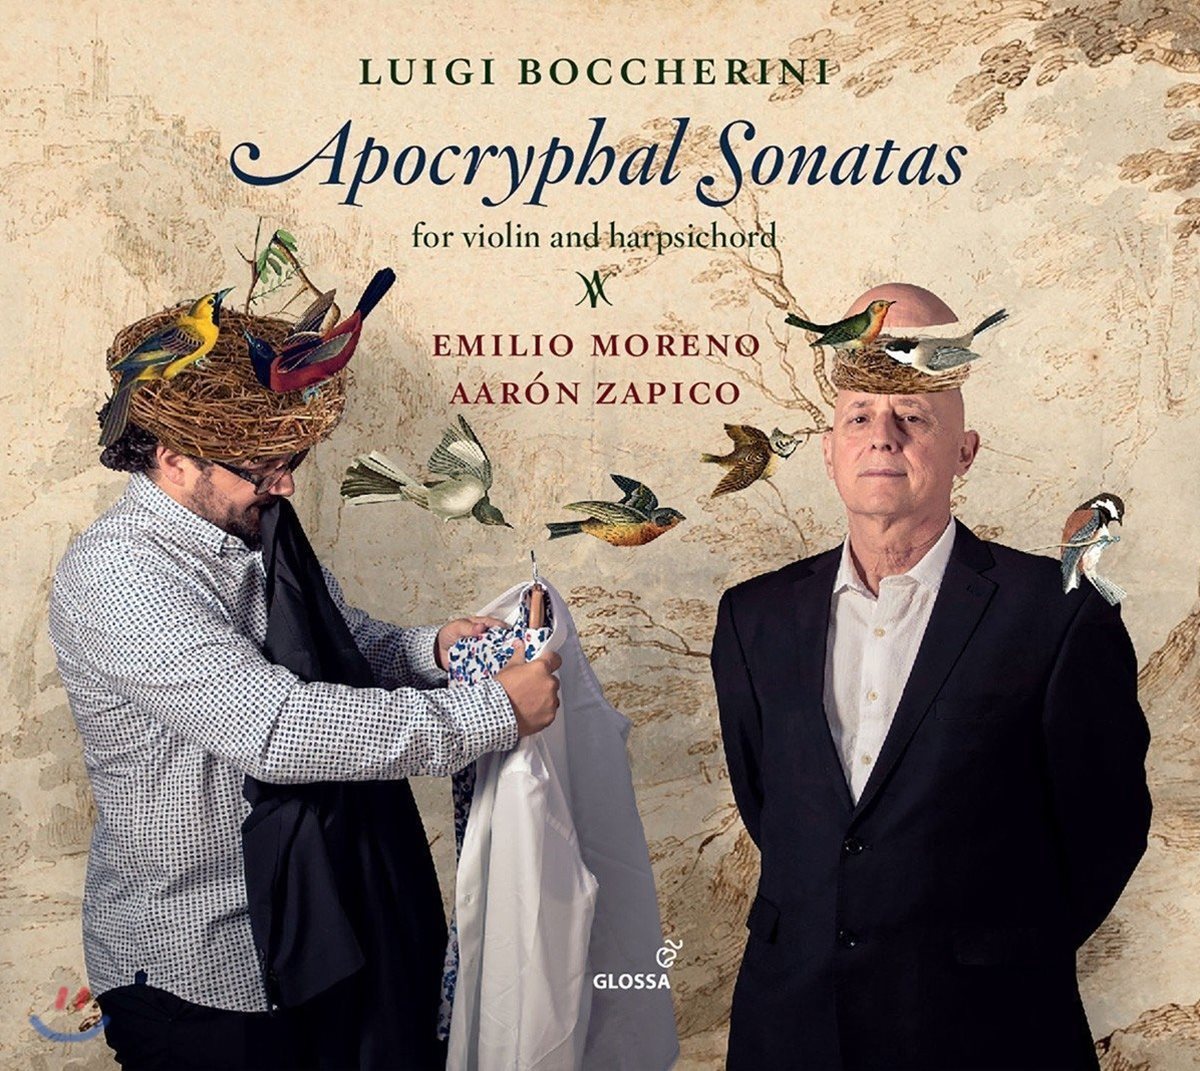 Emilio Moreno 보케리니: 바이올린 편곡 소나타 작품집 (Boccherini: Apocryphal Sonatas)